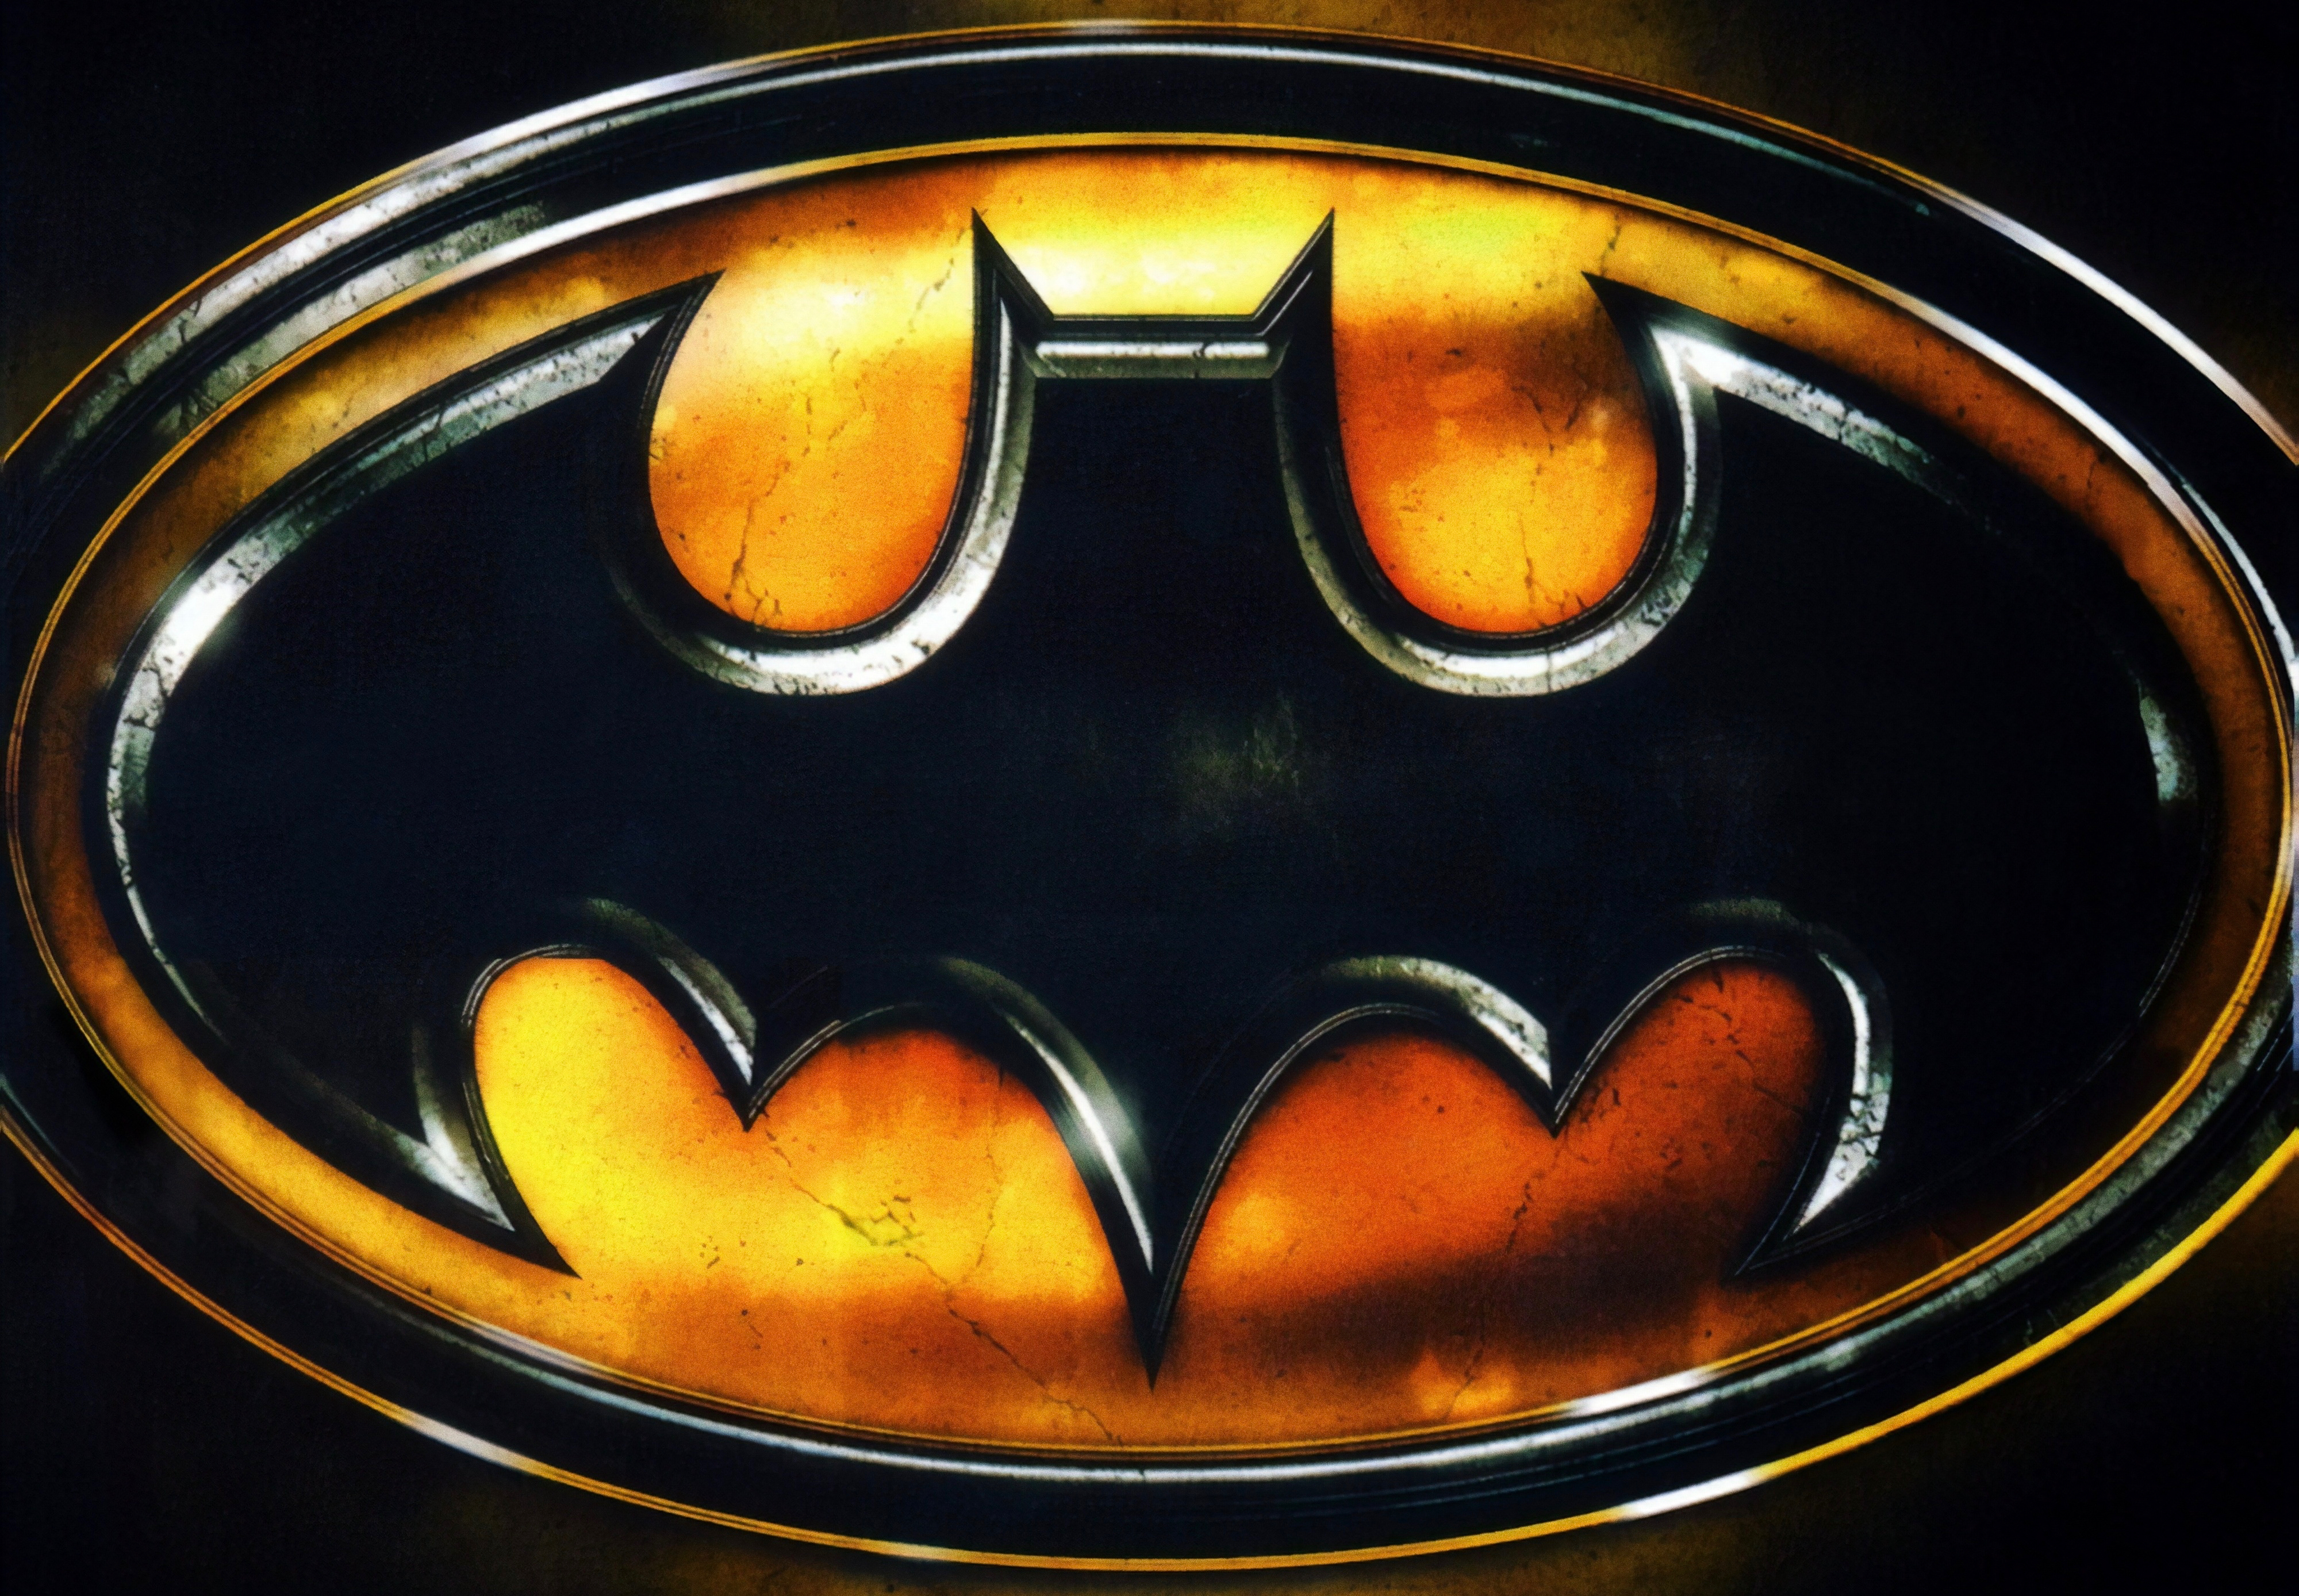 Batman Logo HD Wallpaper And Background